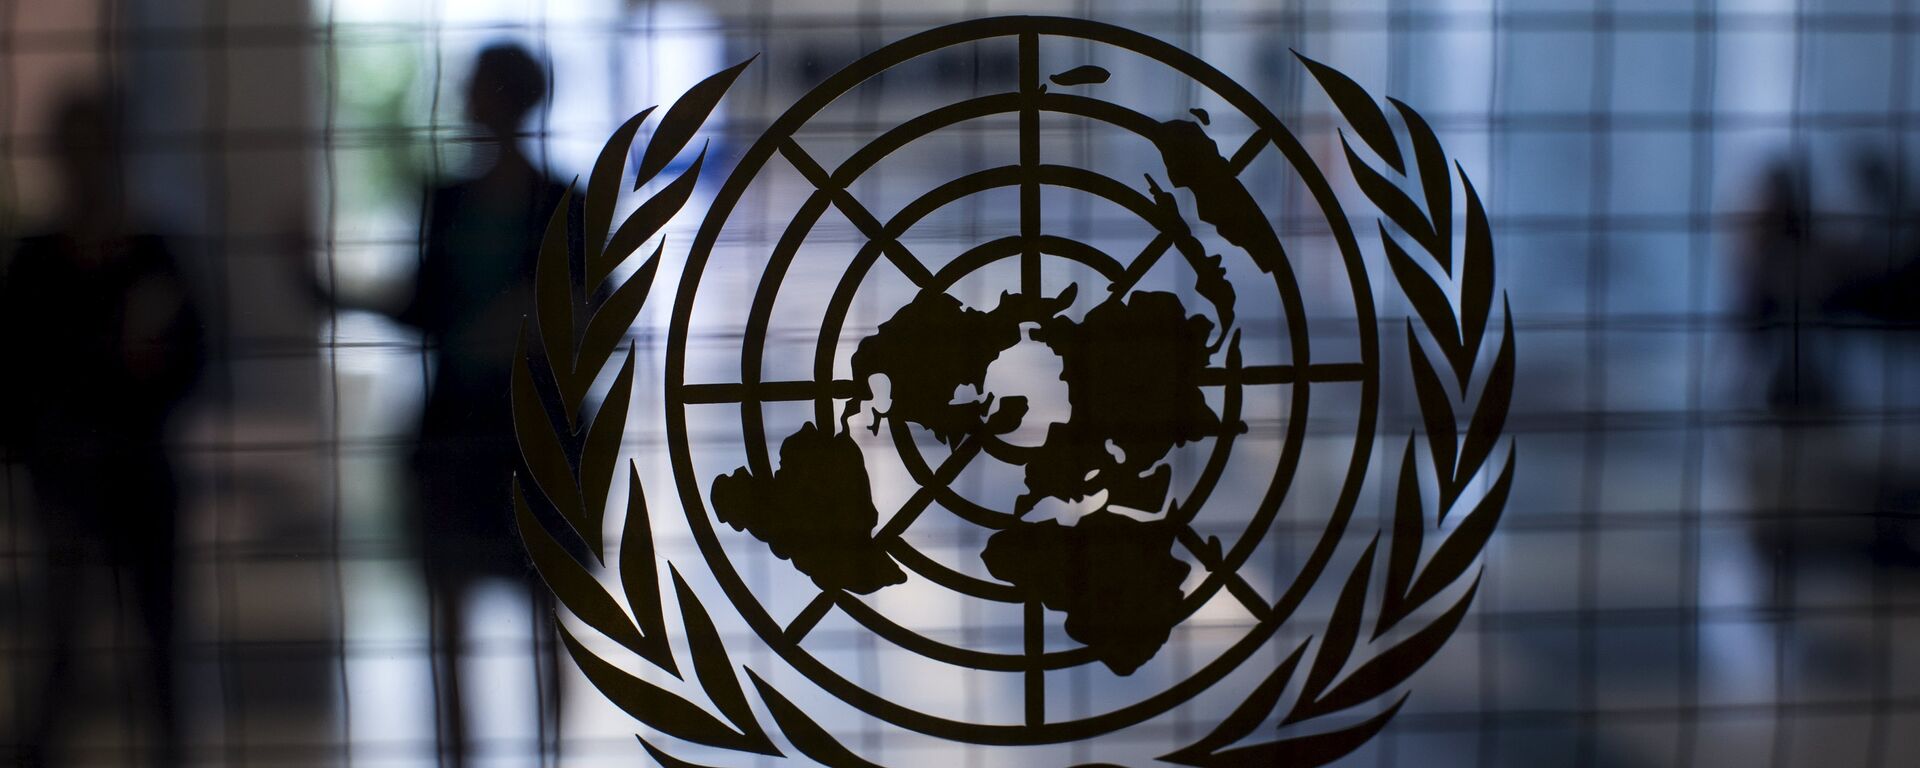 Logo de la ONU - Sputnik Mundo, 1920, 23.02.2021